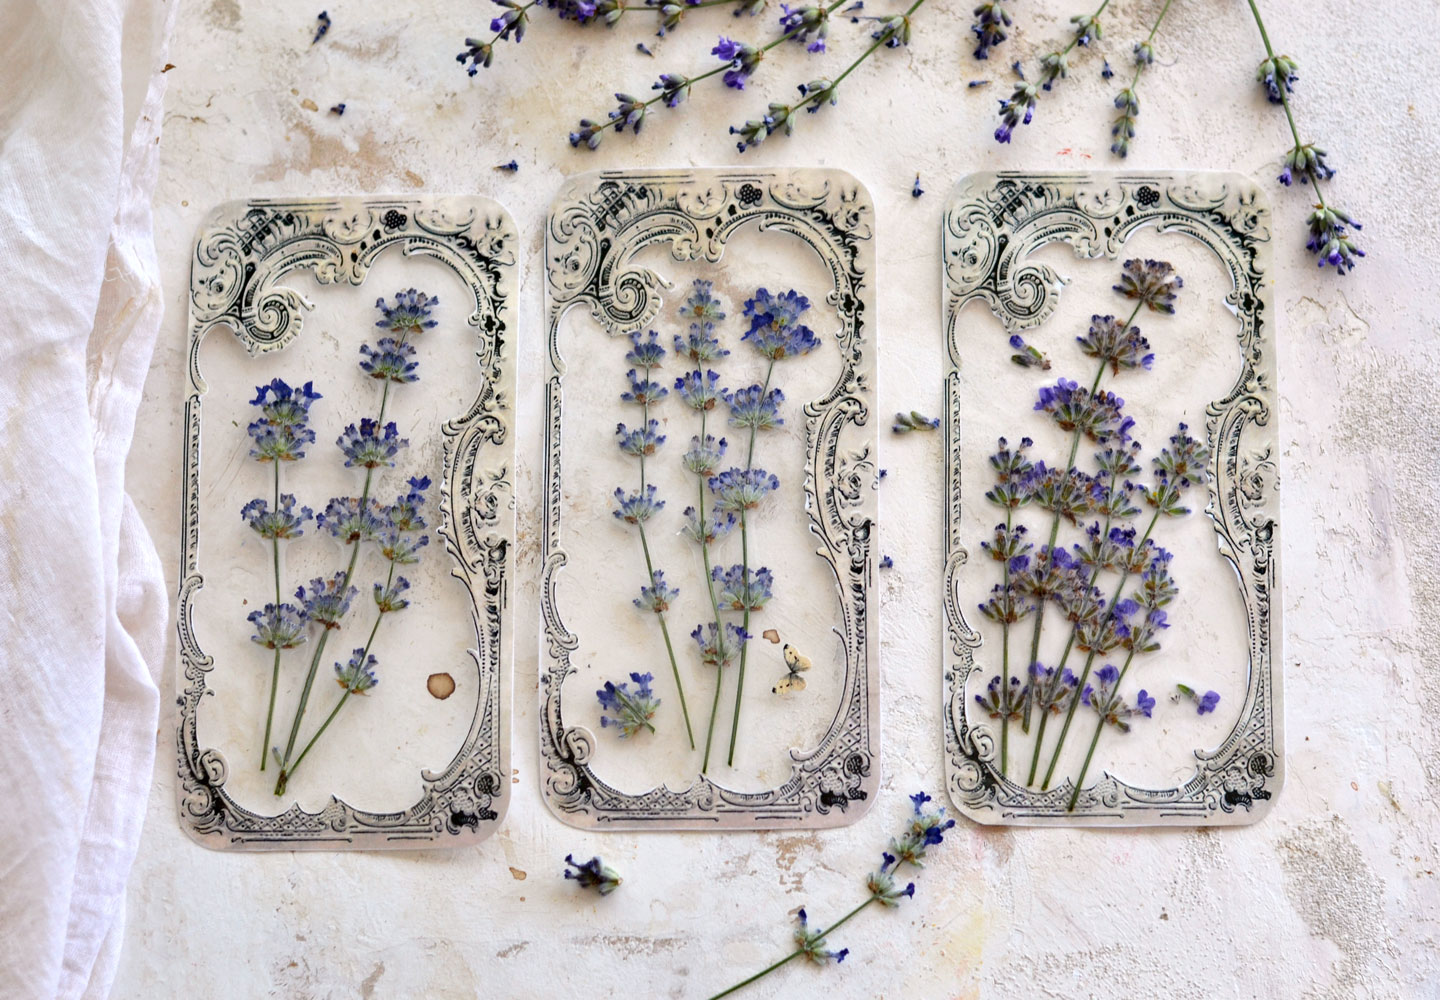 Finished Lavender Pressed Flowers bookmarks